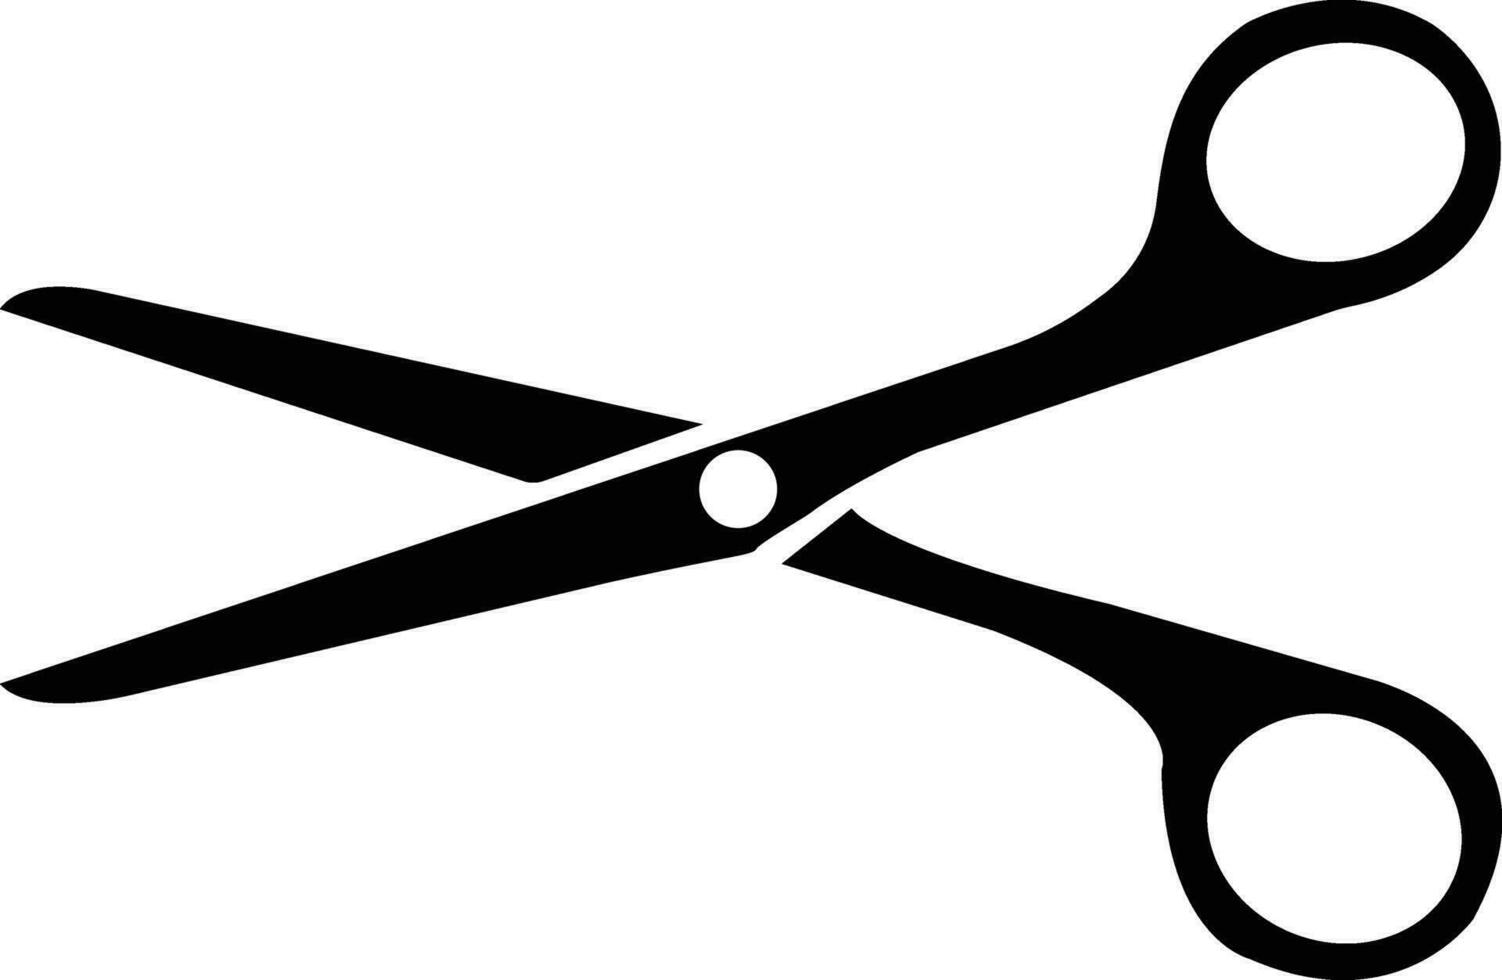 Scissor sign. Flat icon style. Scissors black on transparent background. - stock vector